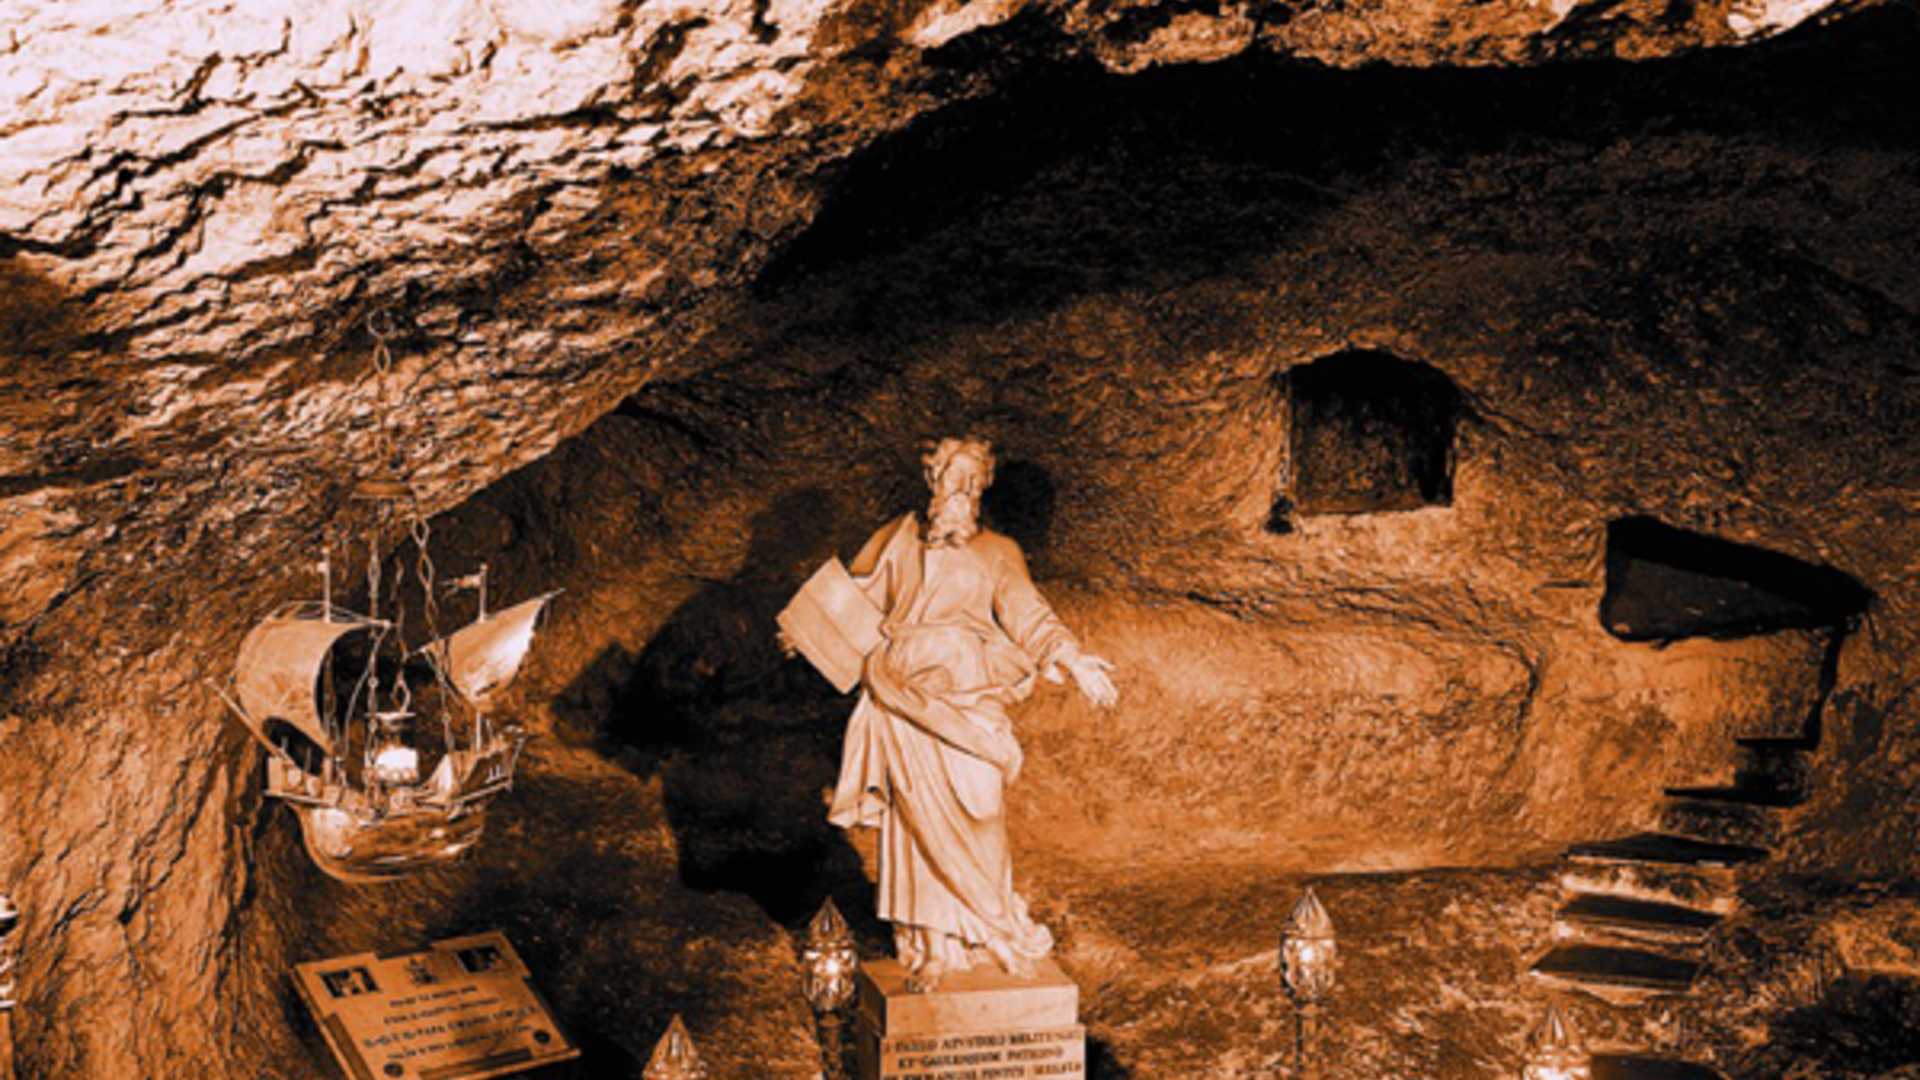 St. Paul's Grotto